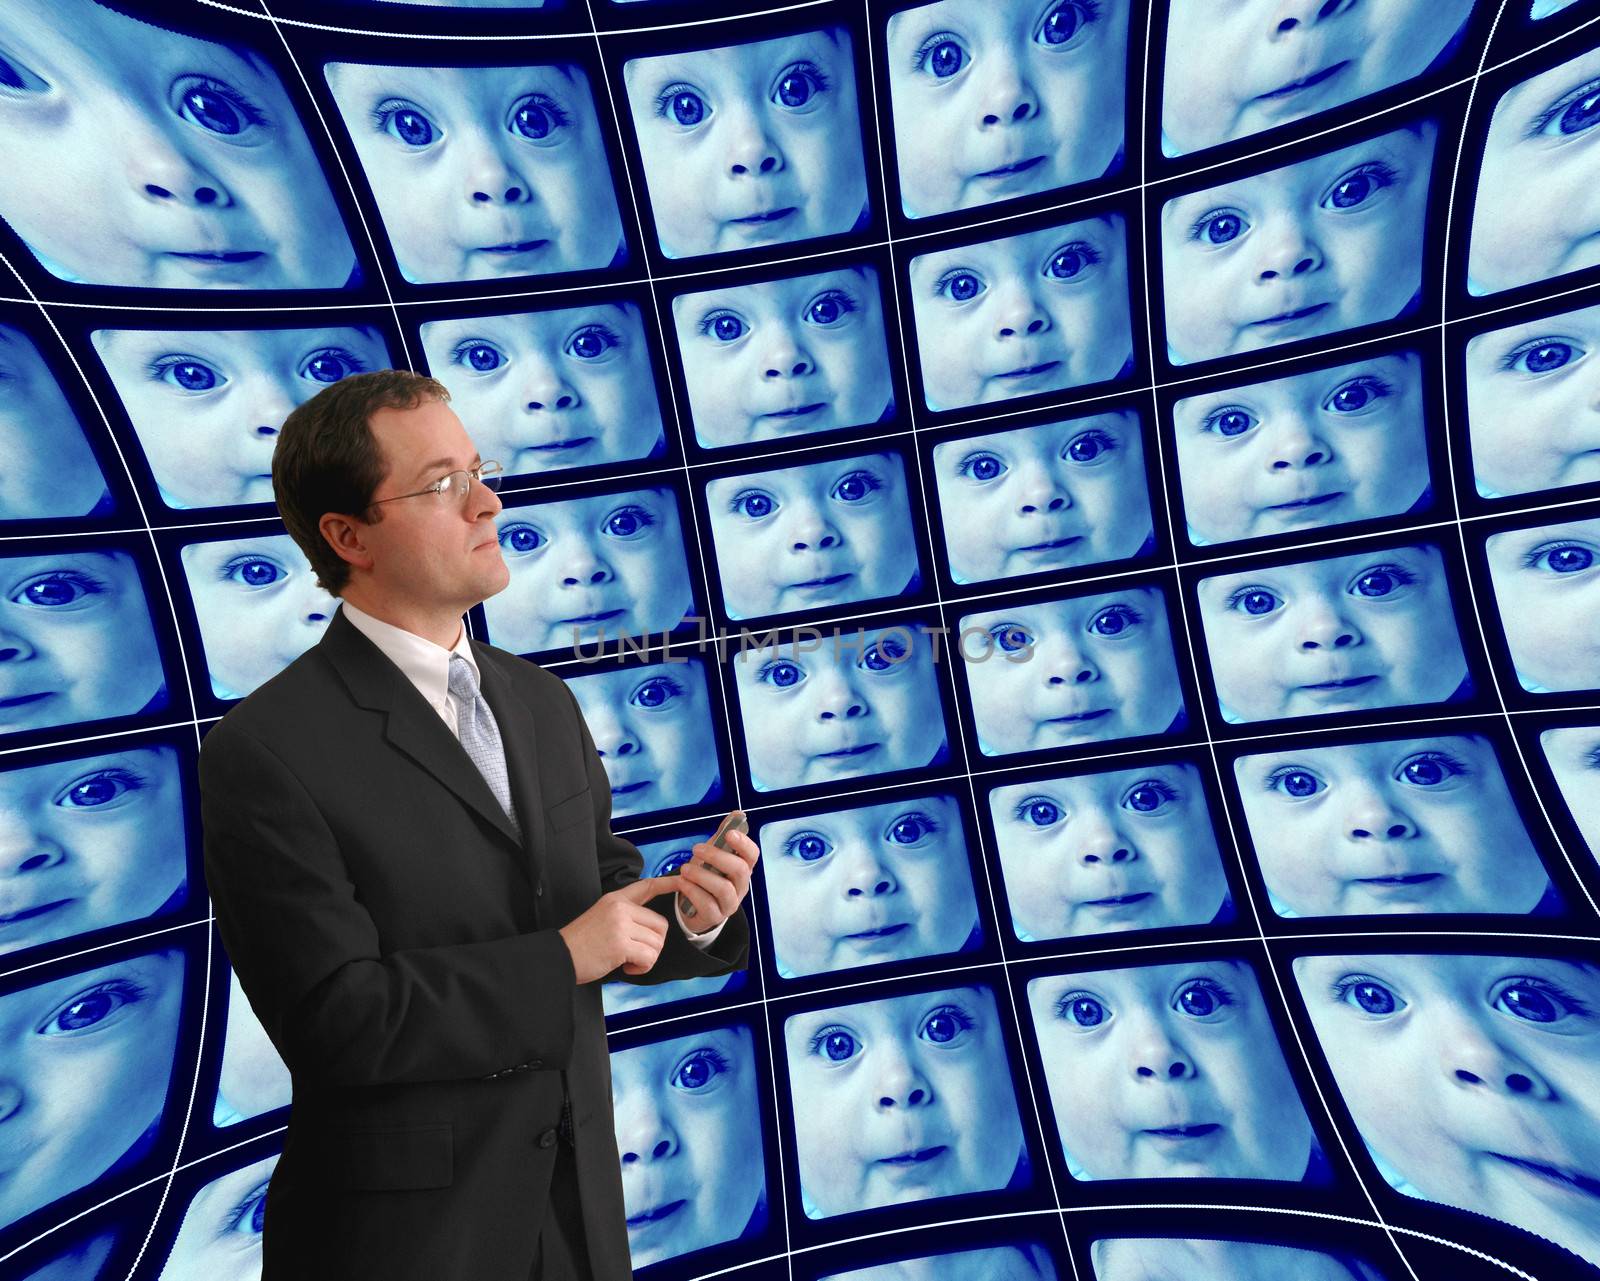 Man in suit monitoring babies on distorted bluish video screens